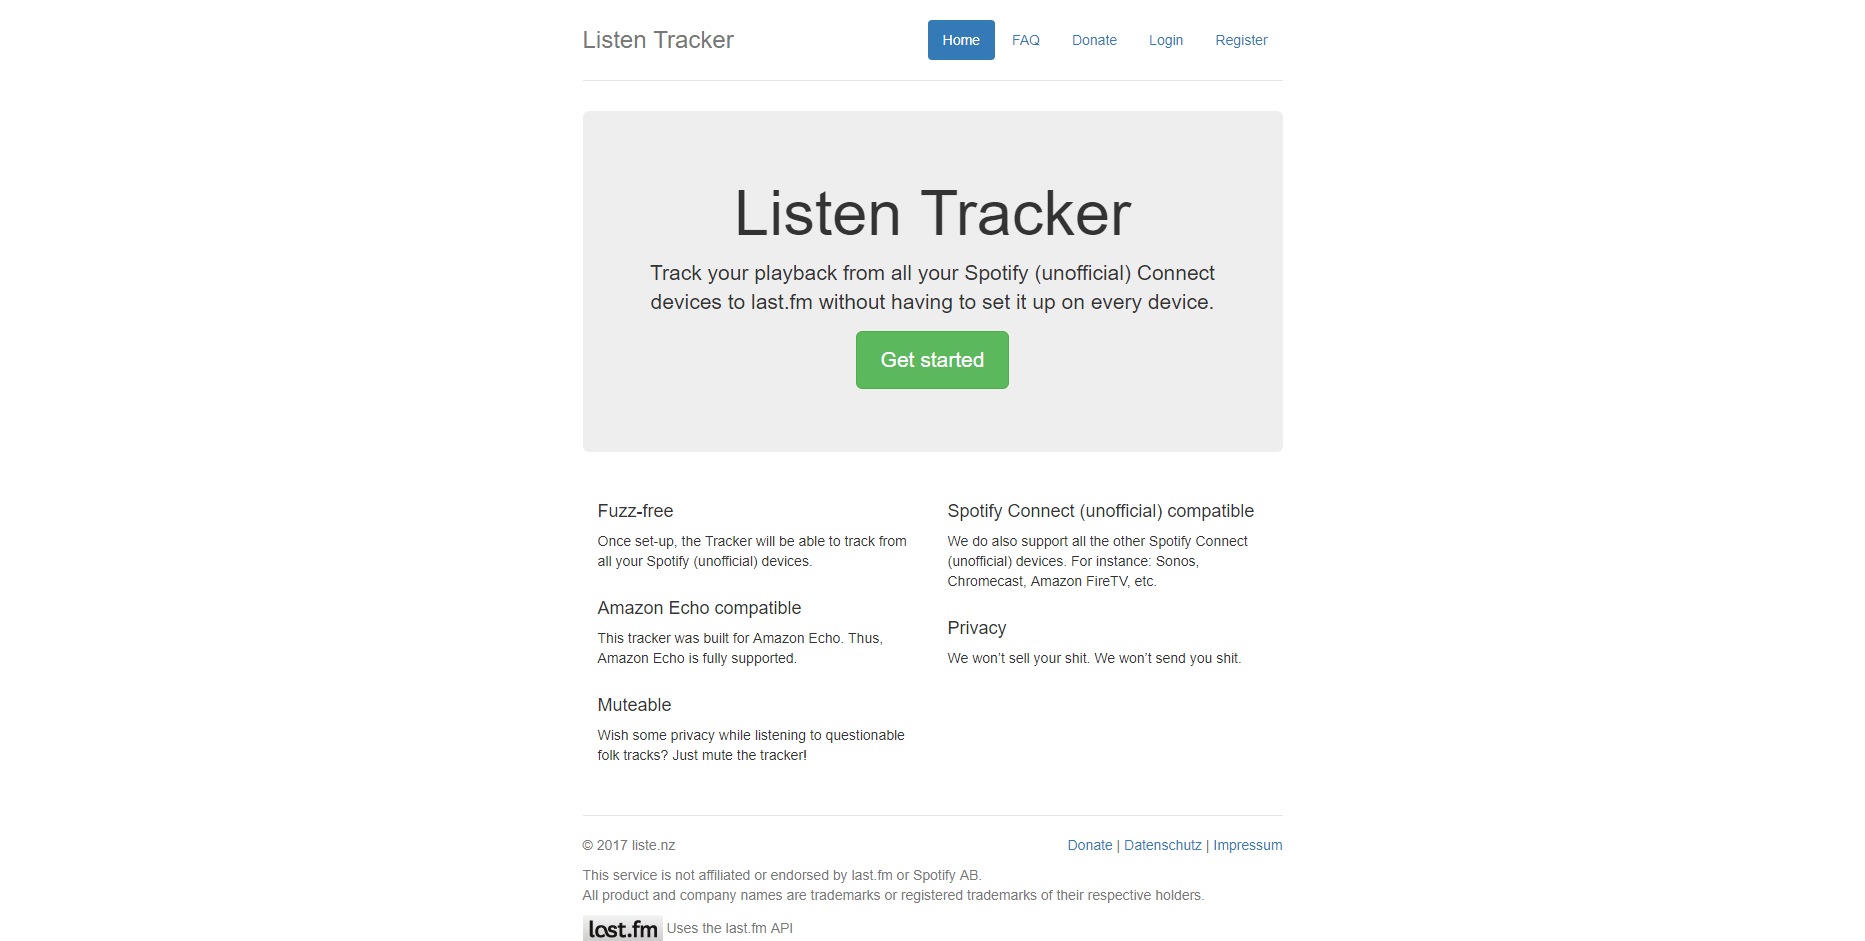 Listen Tracker